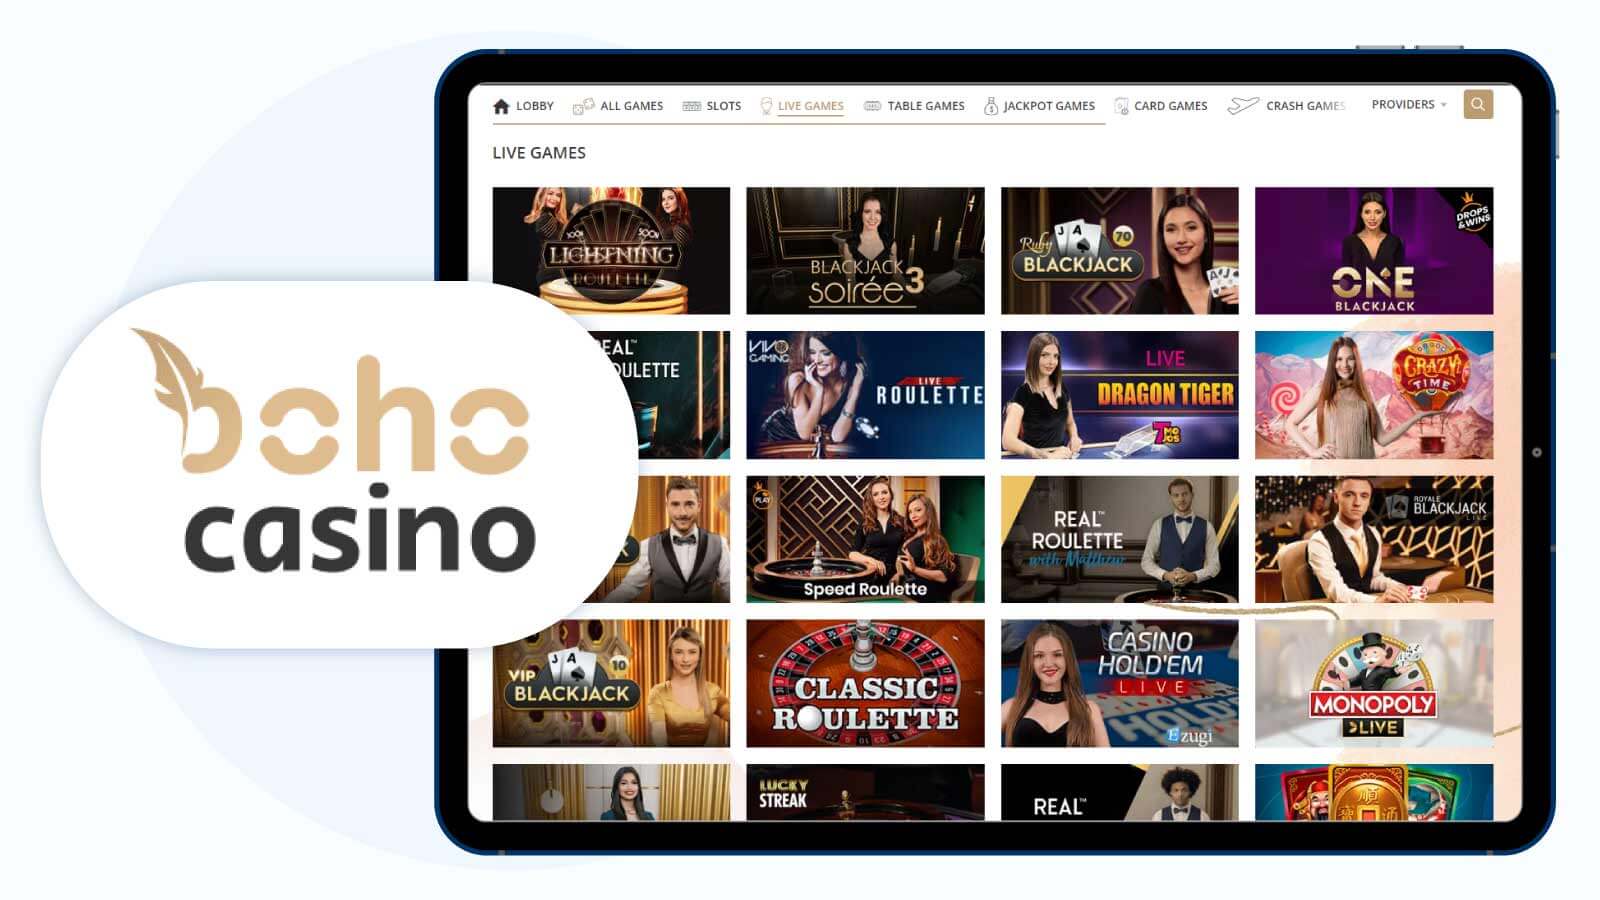 Boho Casino Outstanding New Online Casino for Live Casino Games